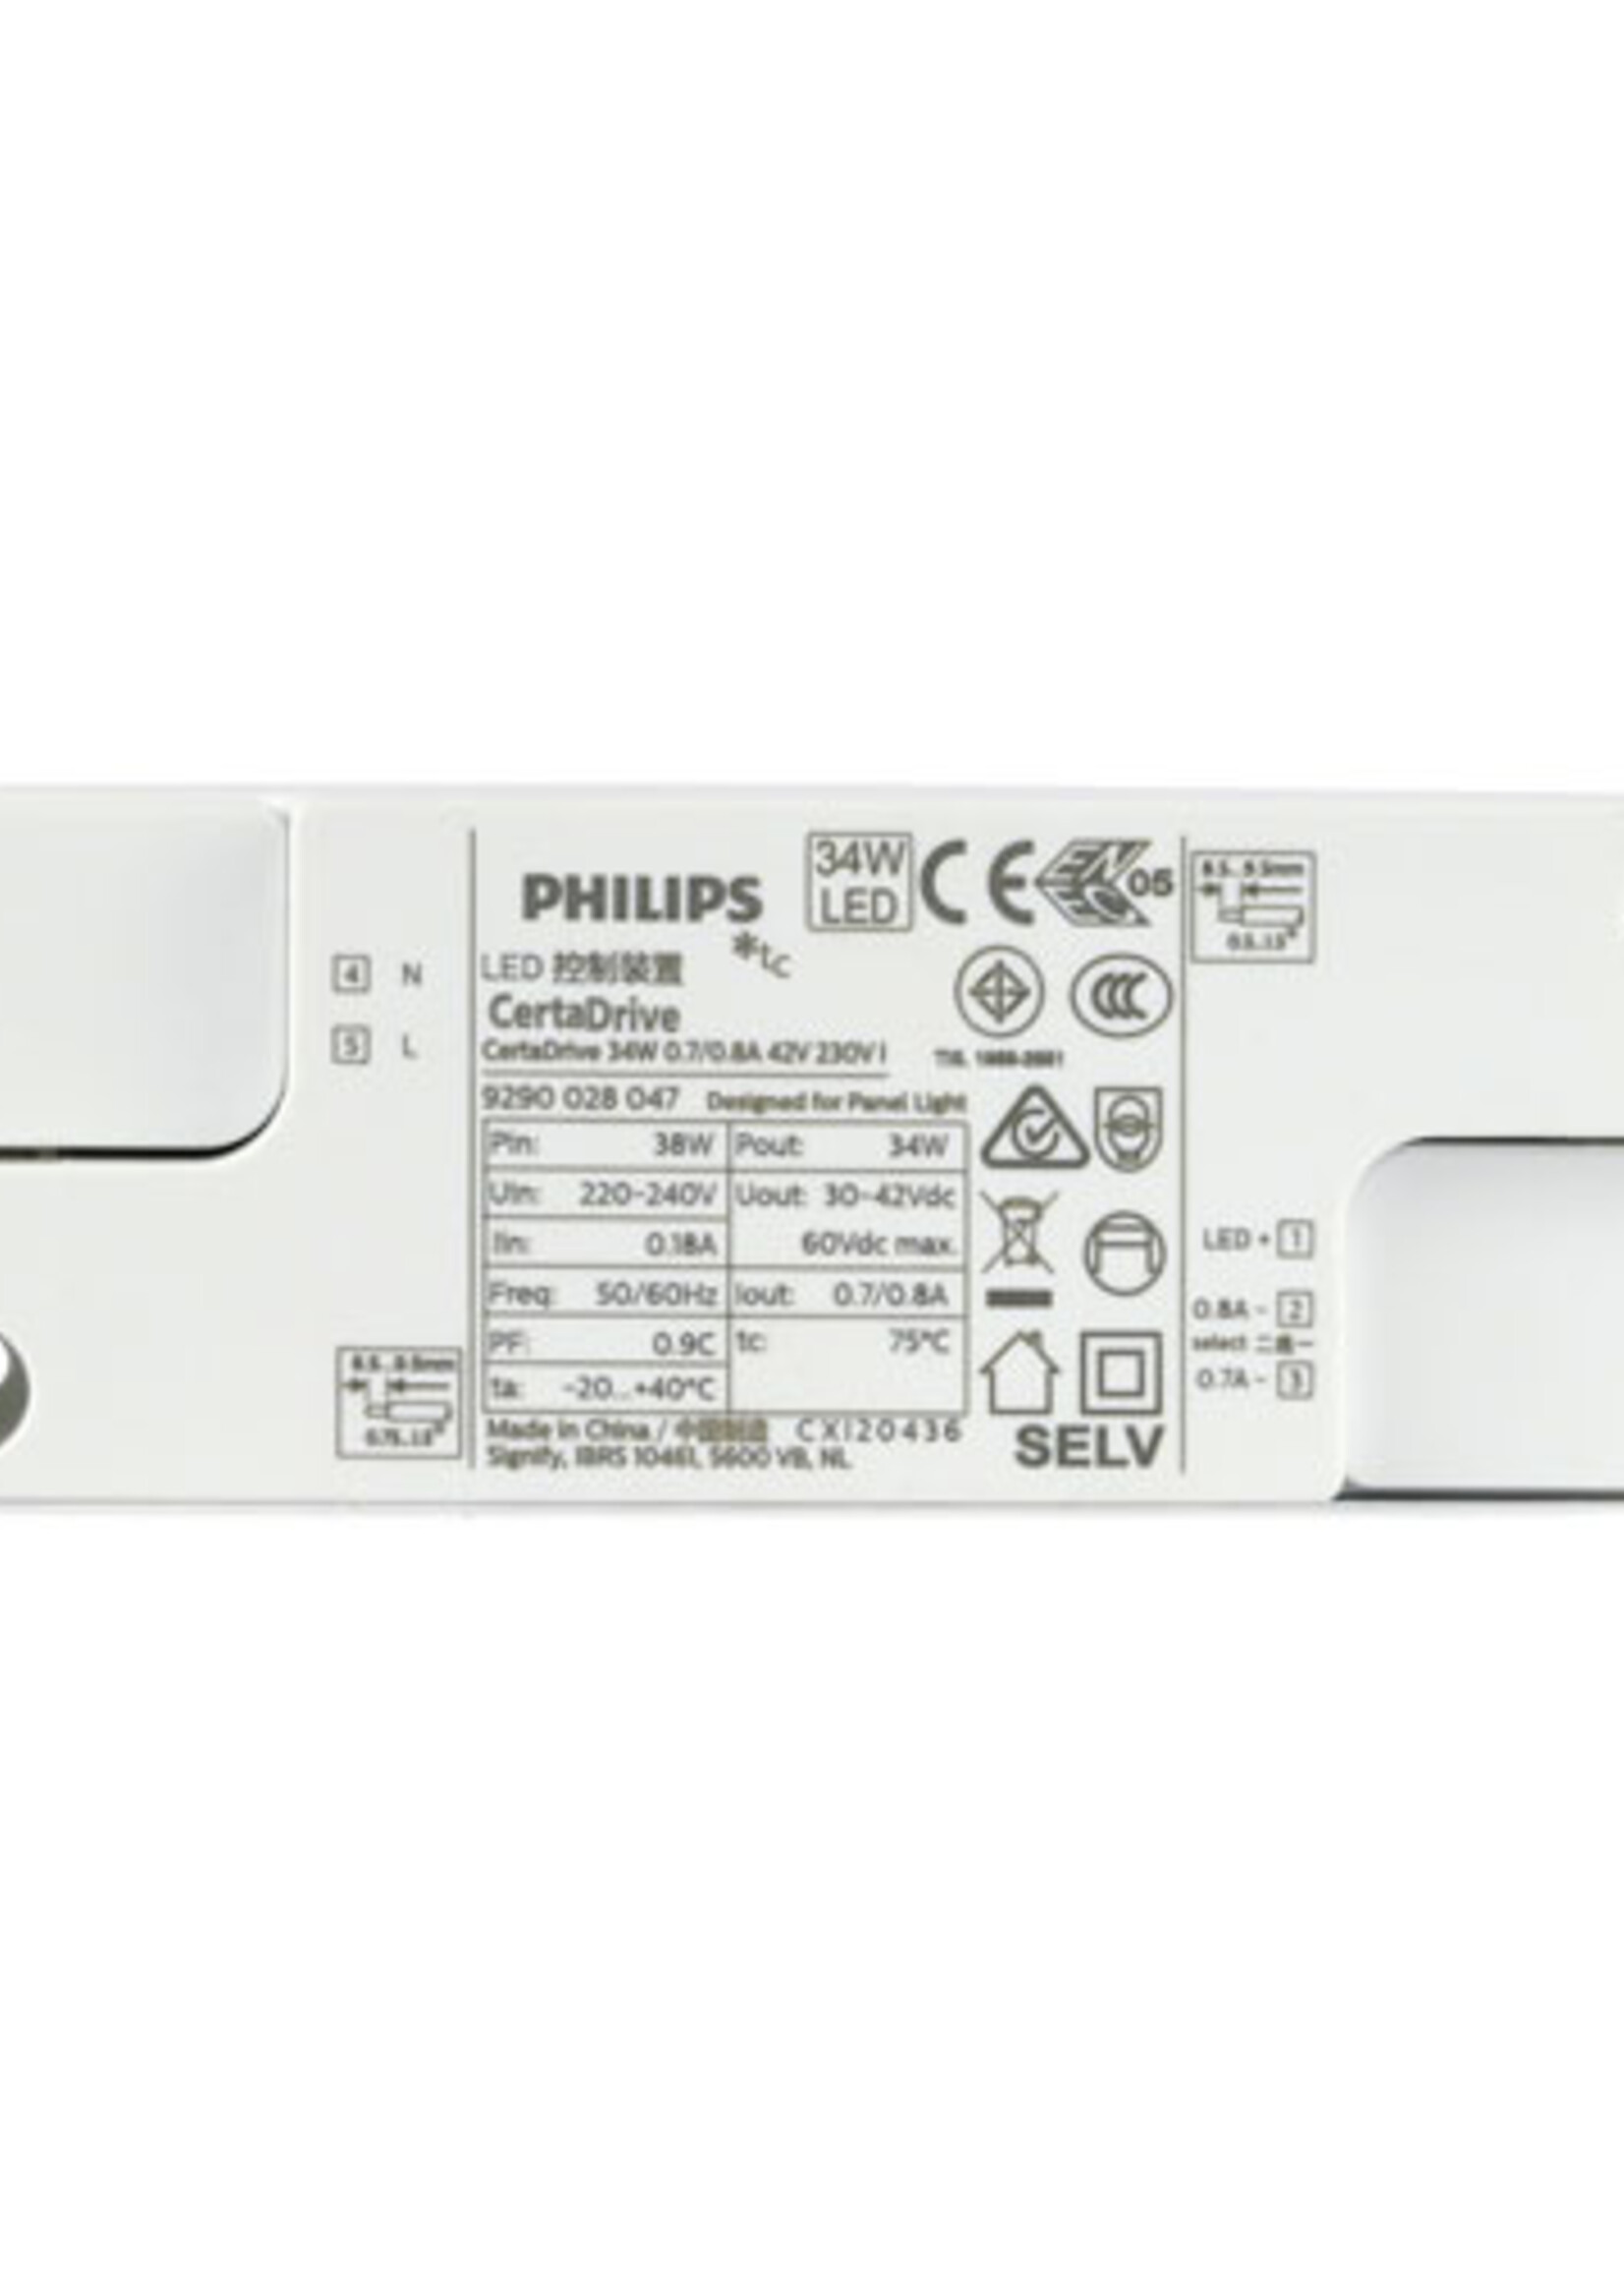 Philips CertaDrive Philips LED Driver 34W 700mA/800mA flikkervrij